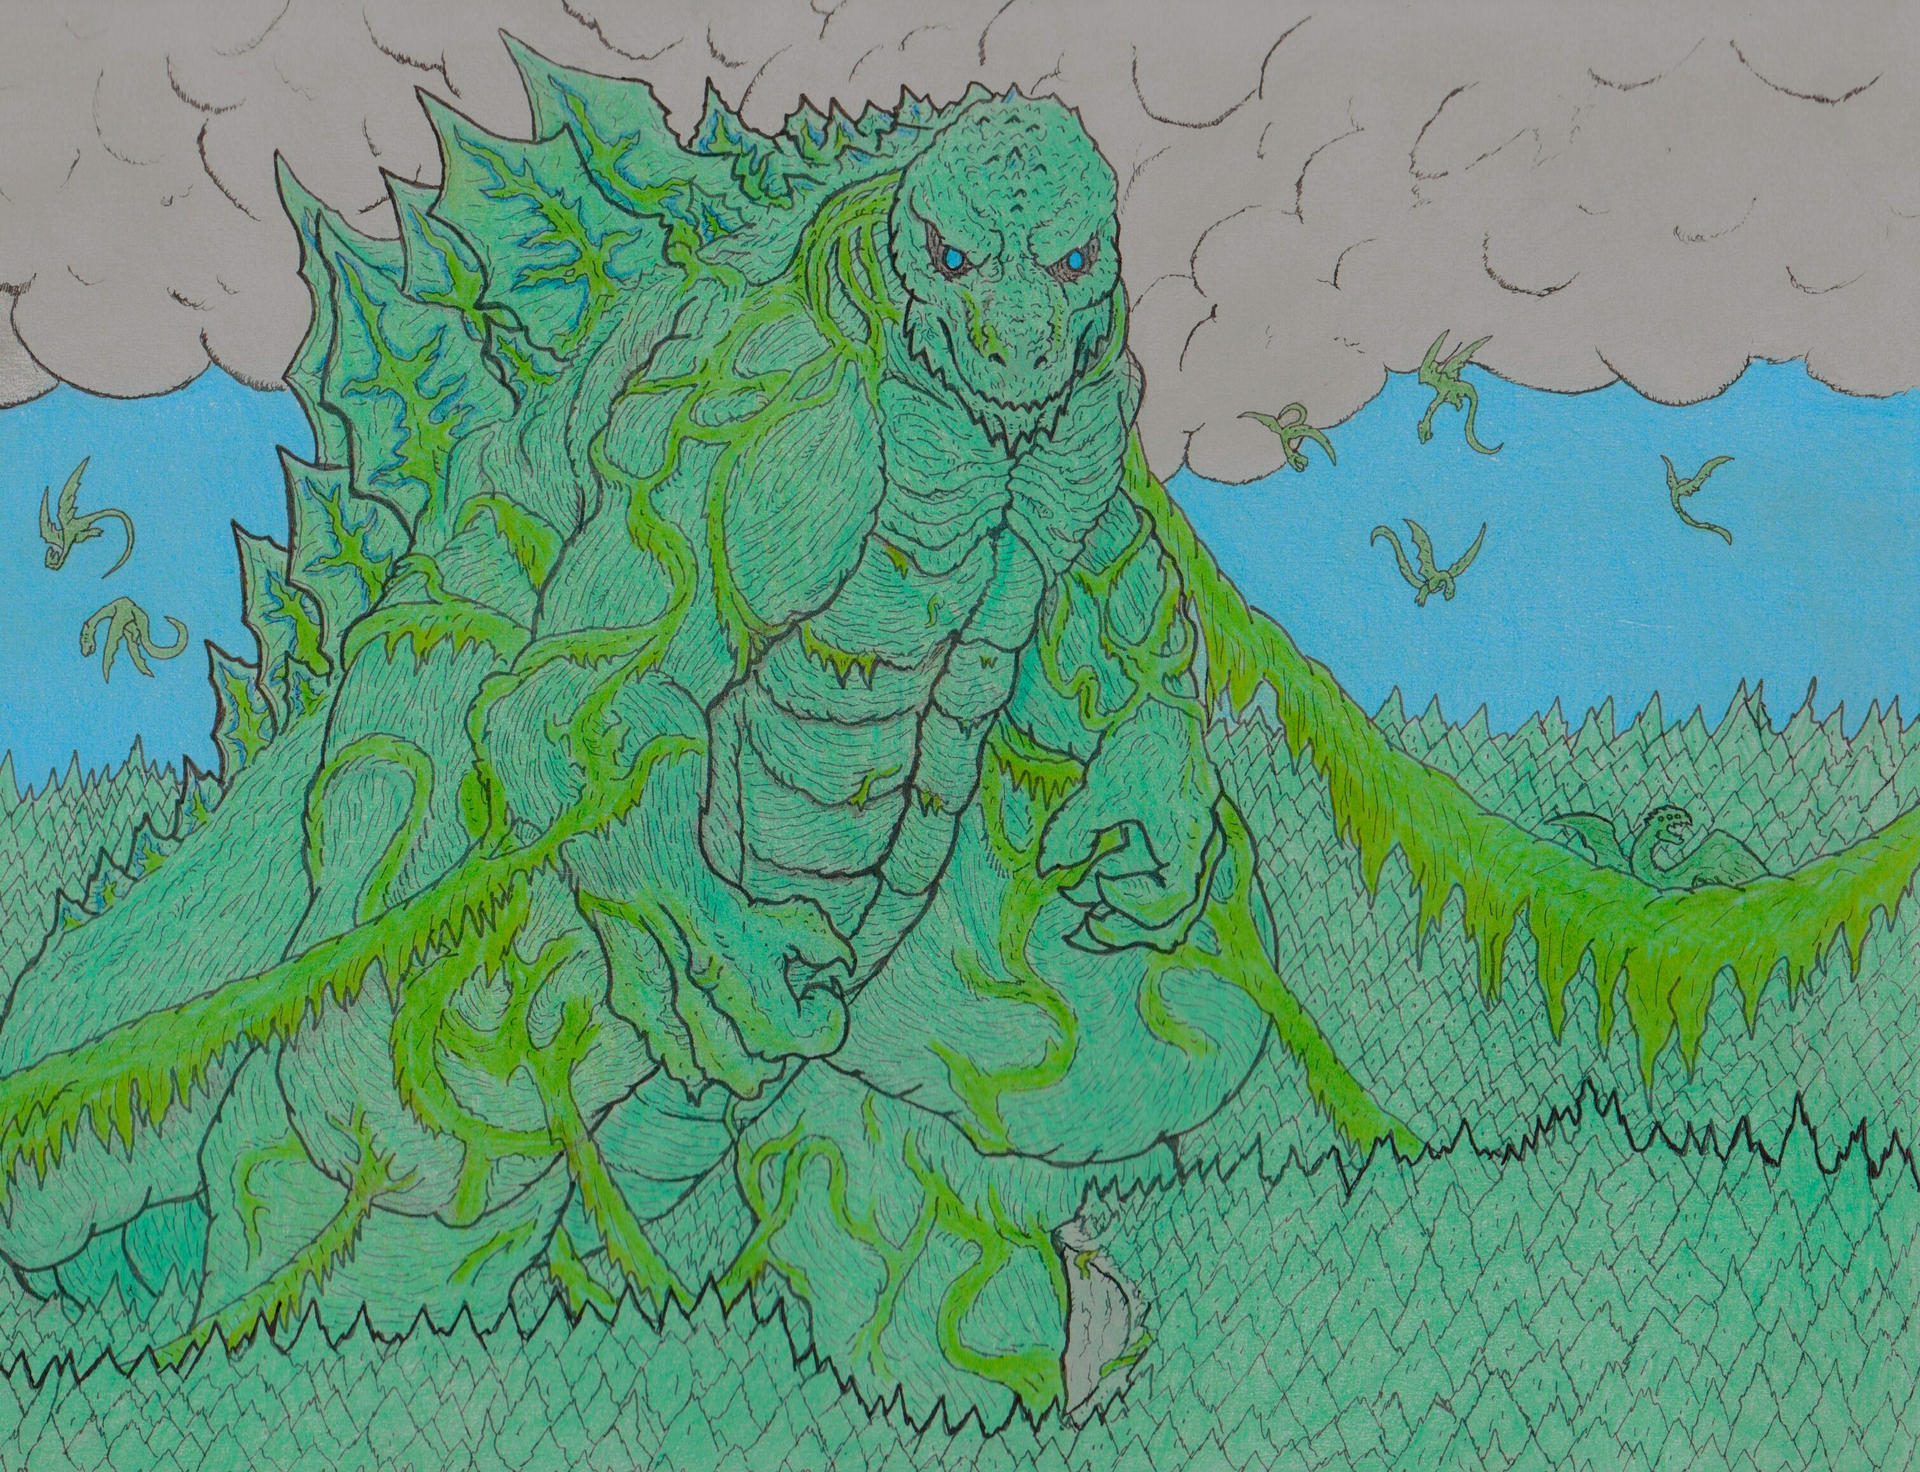 Godzilla Earth: The Primordial Rightful Ruler by AVGK04 on DeviantArt